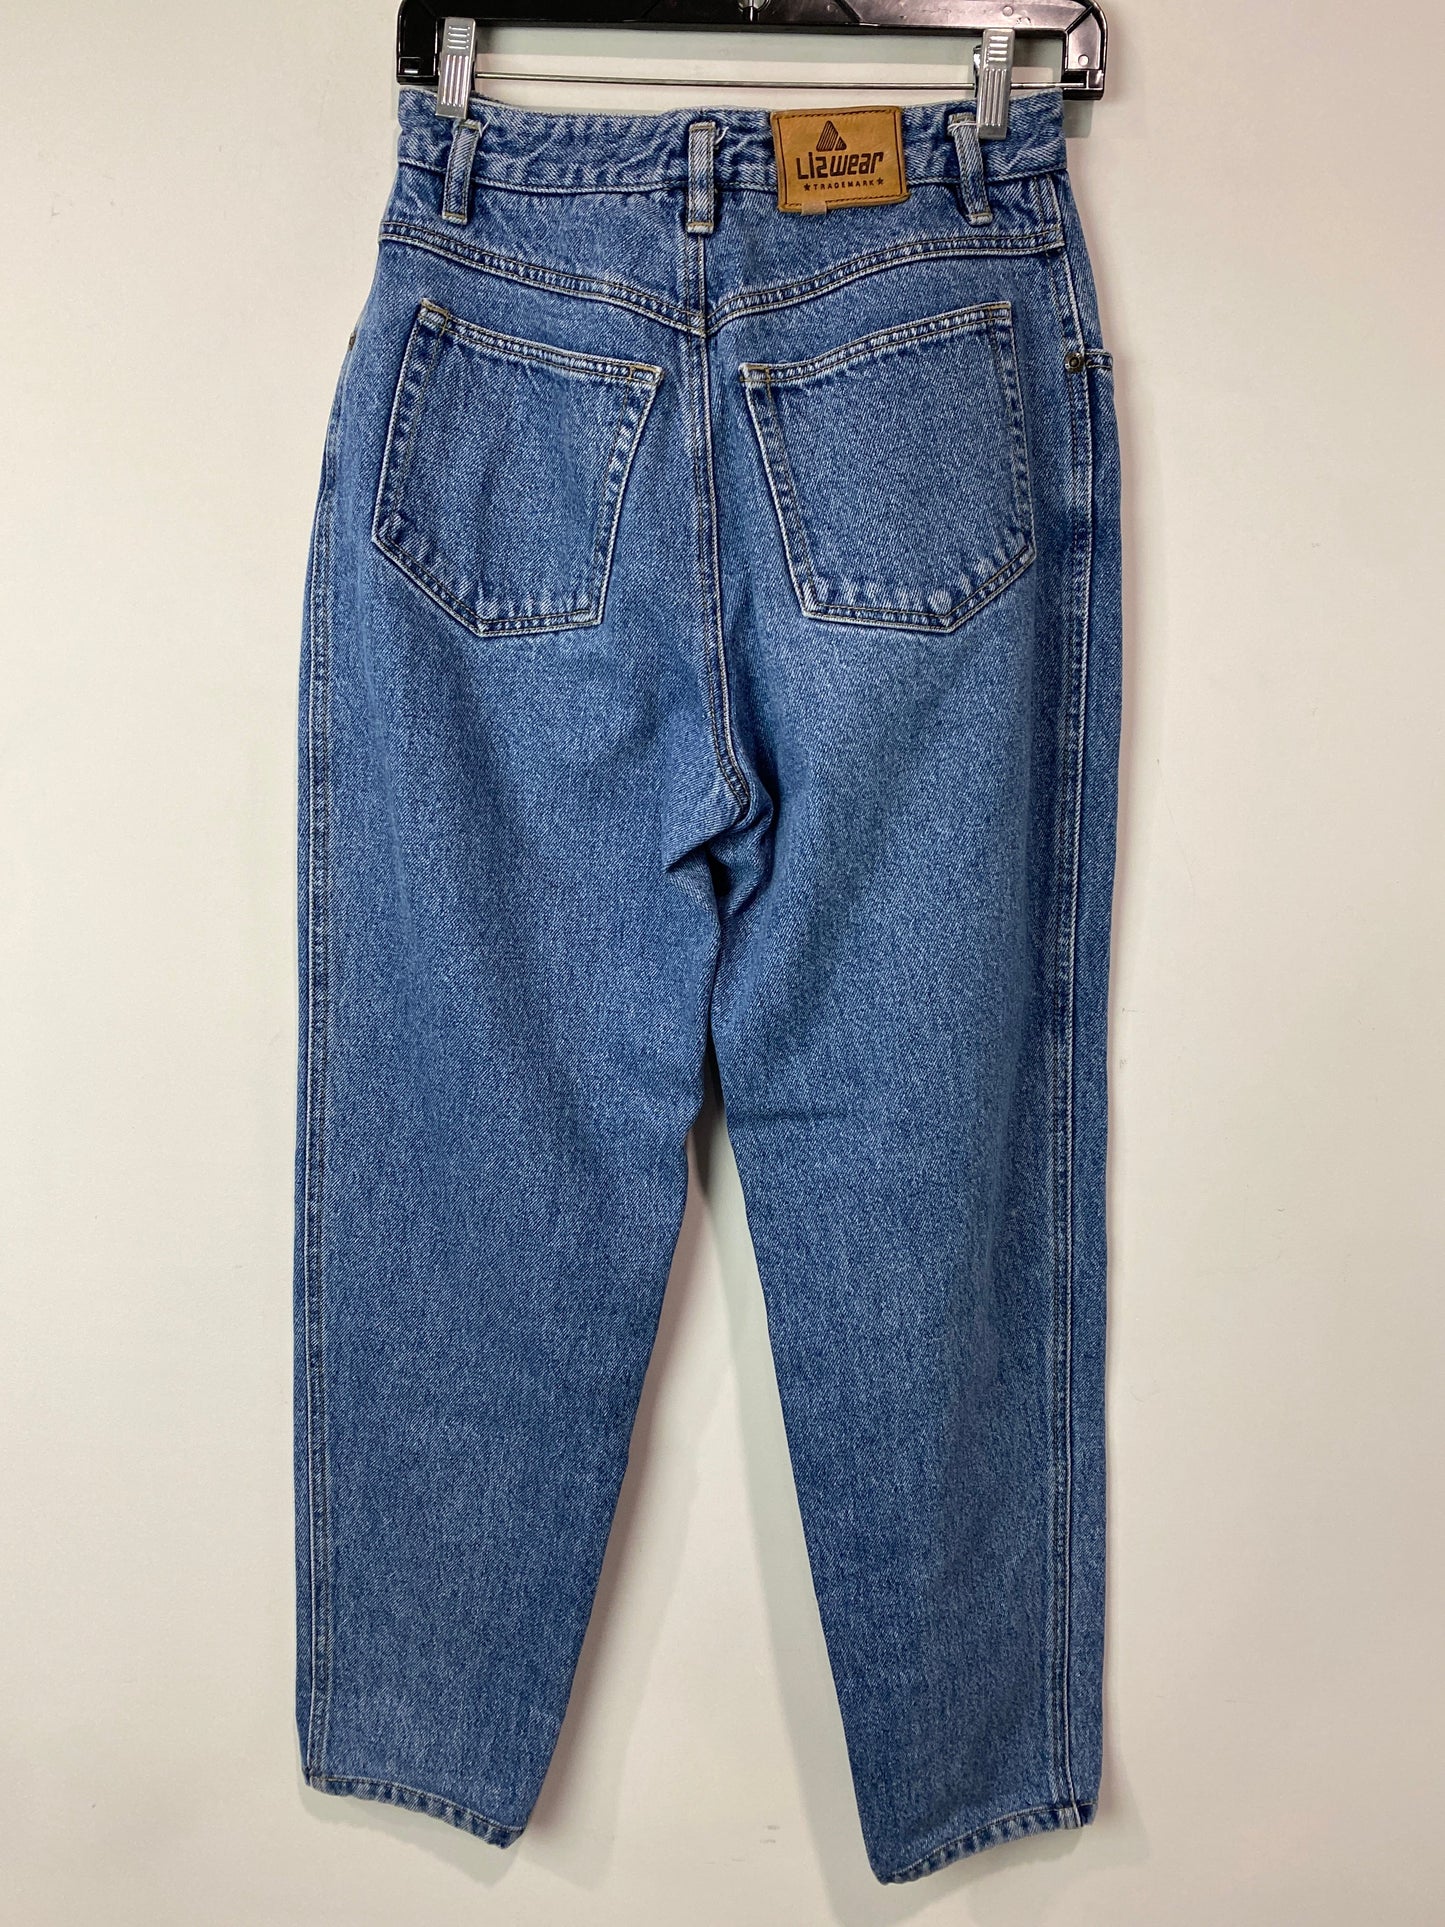 Jeans Straight By Liz Wear  Size: 8